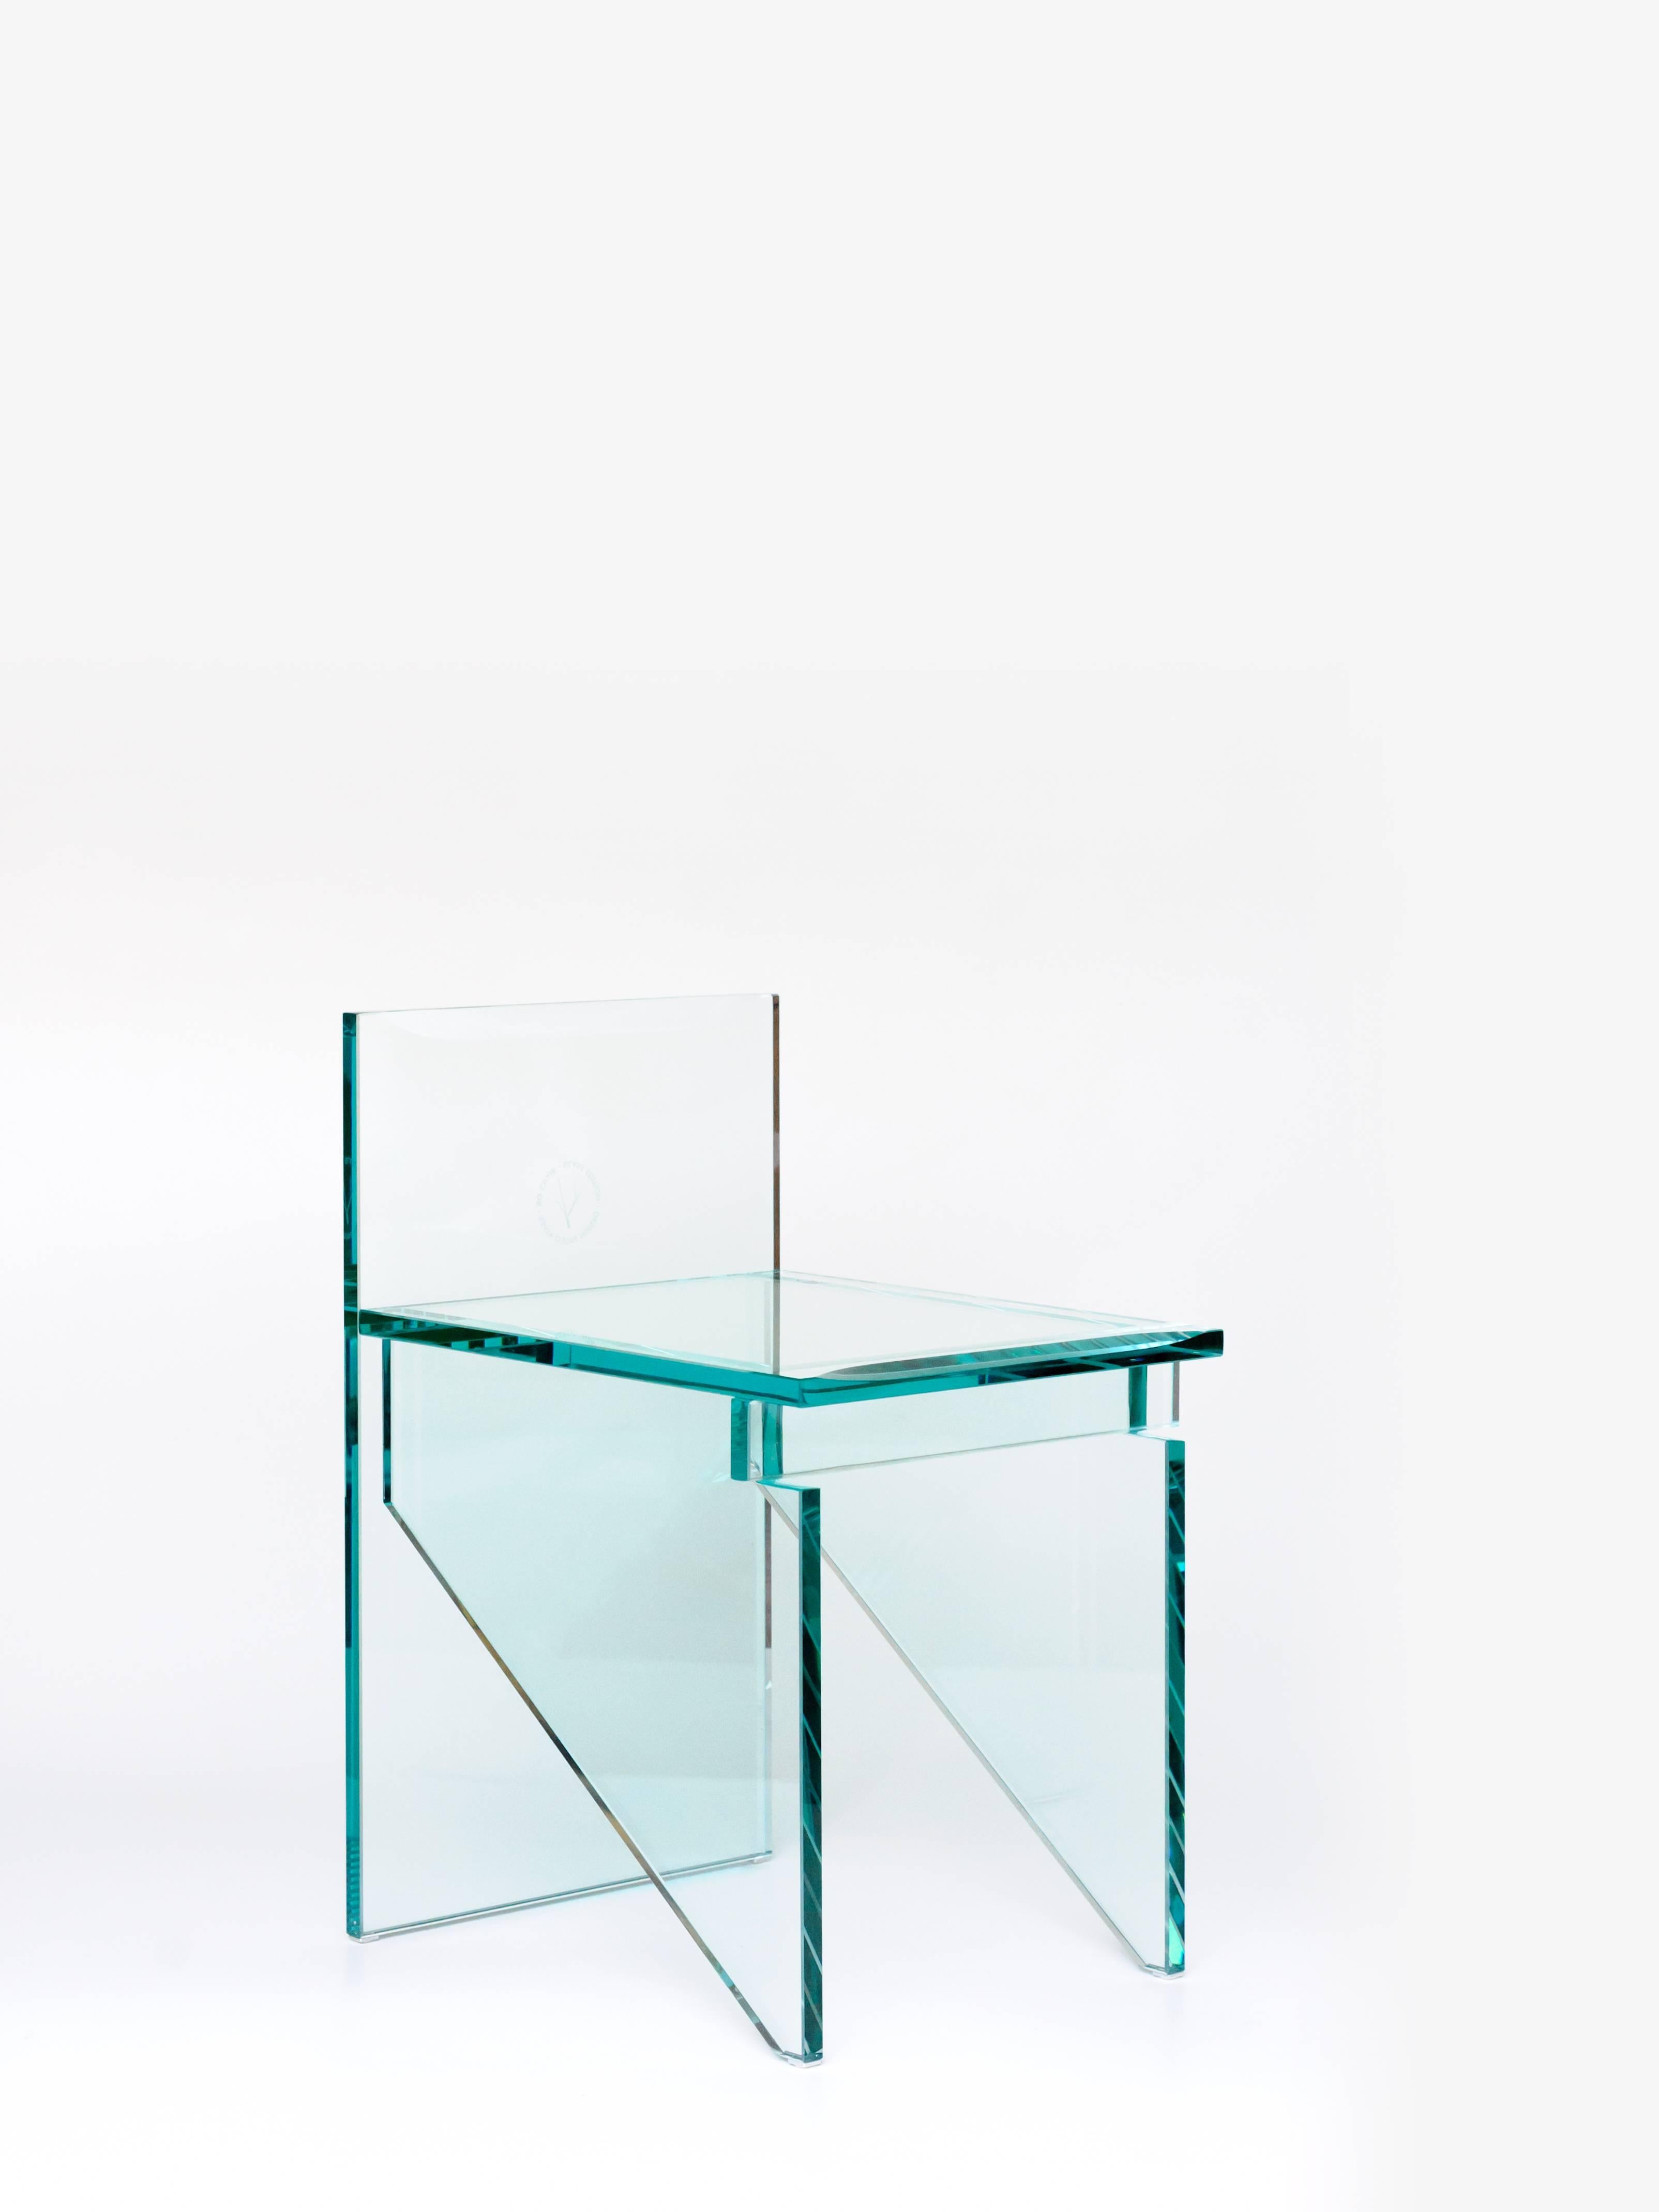 Contemporary Bo glass chair edition 2012 by Paulo Alves

Handmade

Dimenions: 40 cm W 47 cm D 64.5 cm H

43 kg.